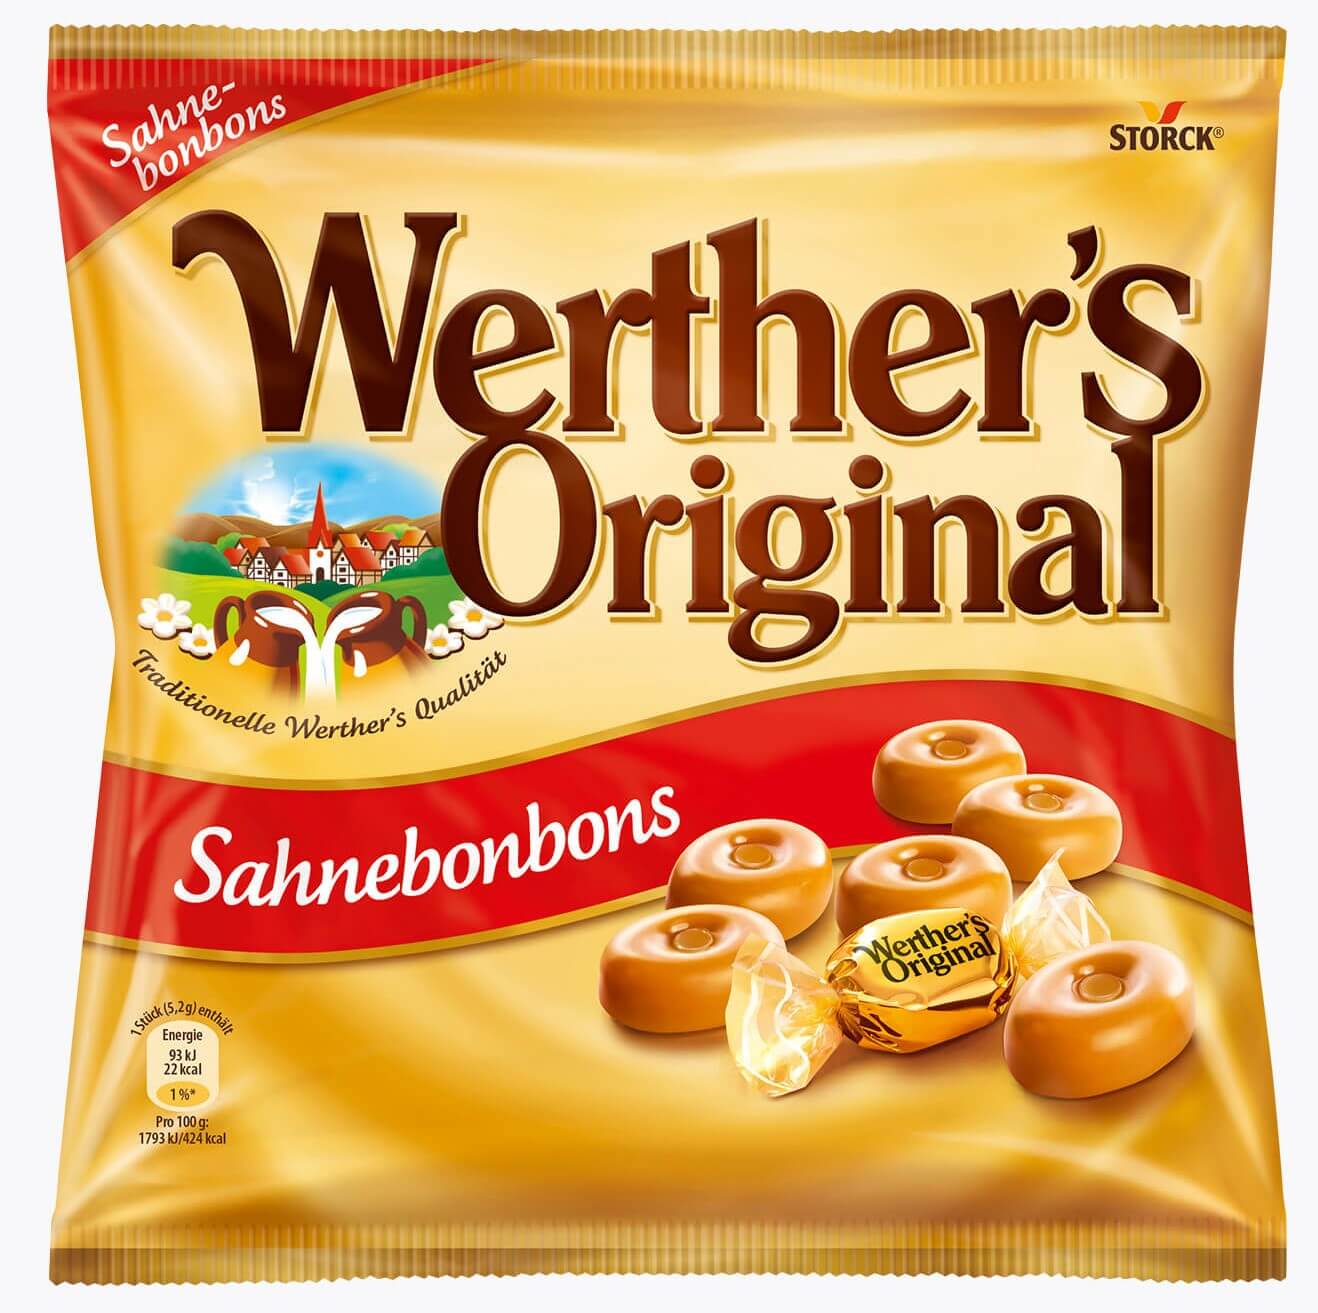 Werthers Original Sahnebonbons